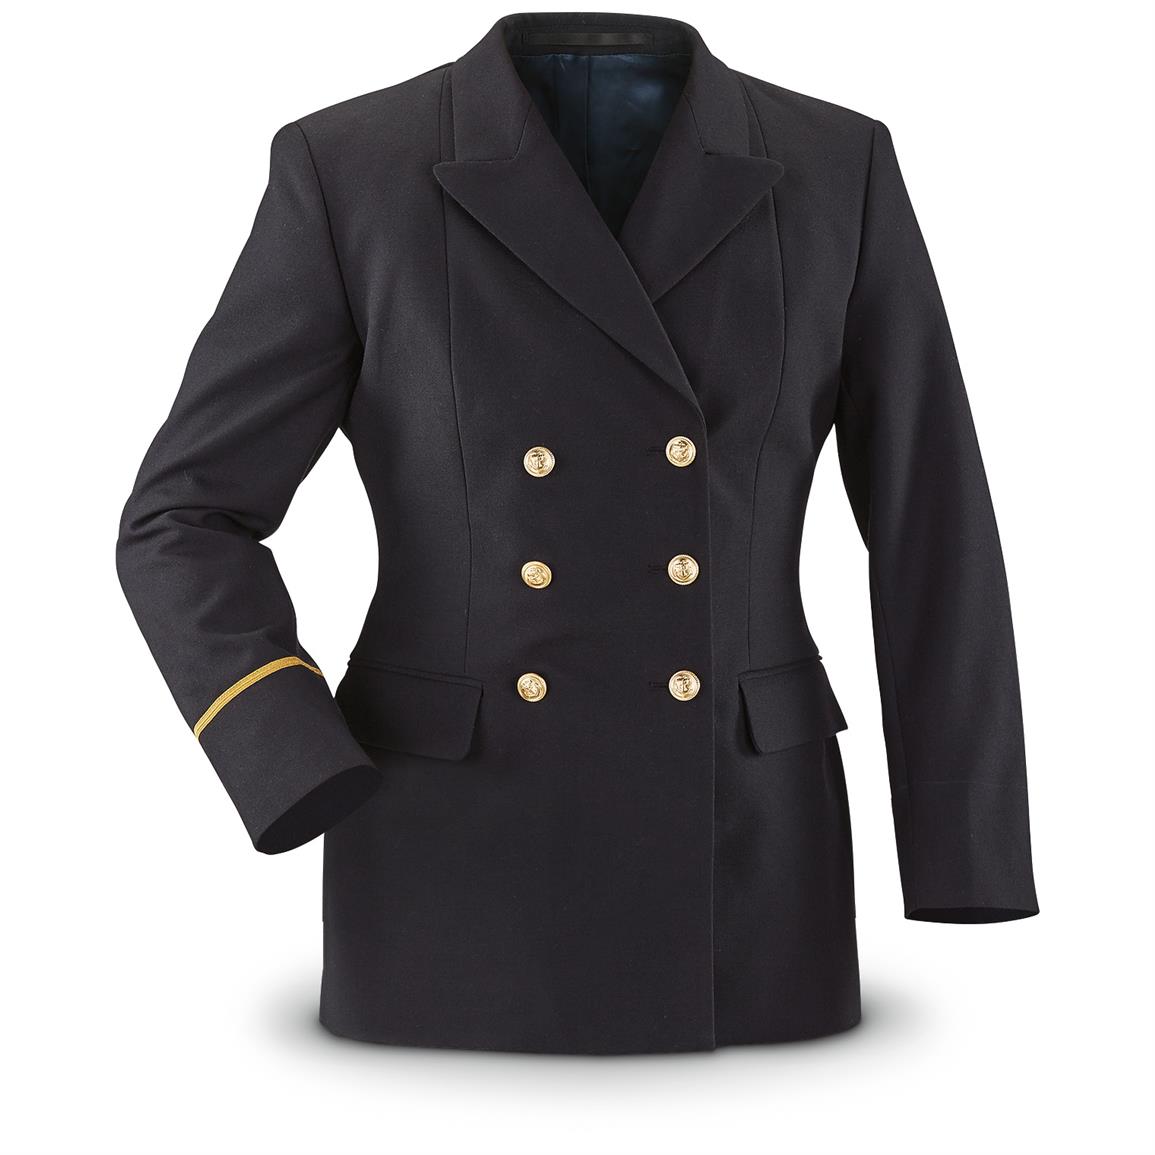 Like New German Military Surplus Navy Dress Jacket - 652692, Military Peacoats & Dress Jackets 